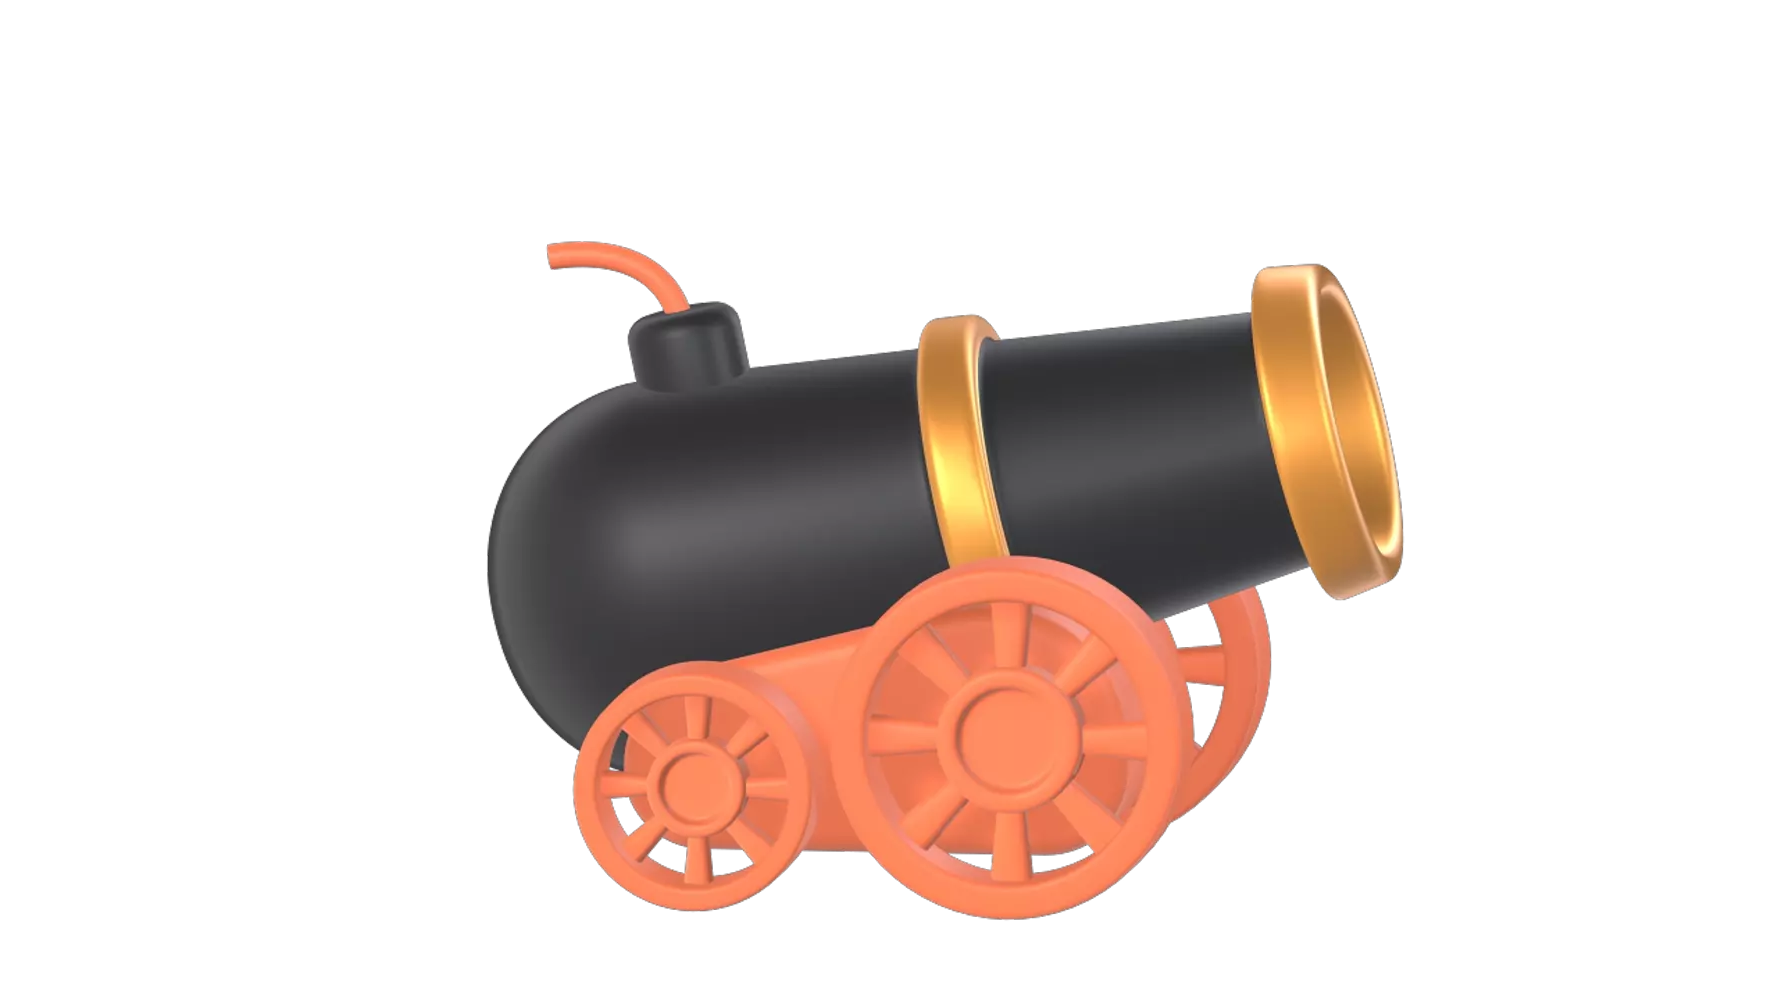 Cannon 3D Graphic